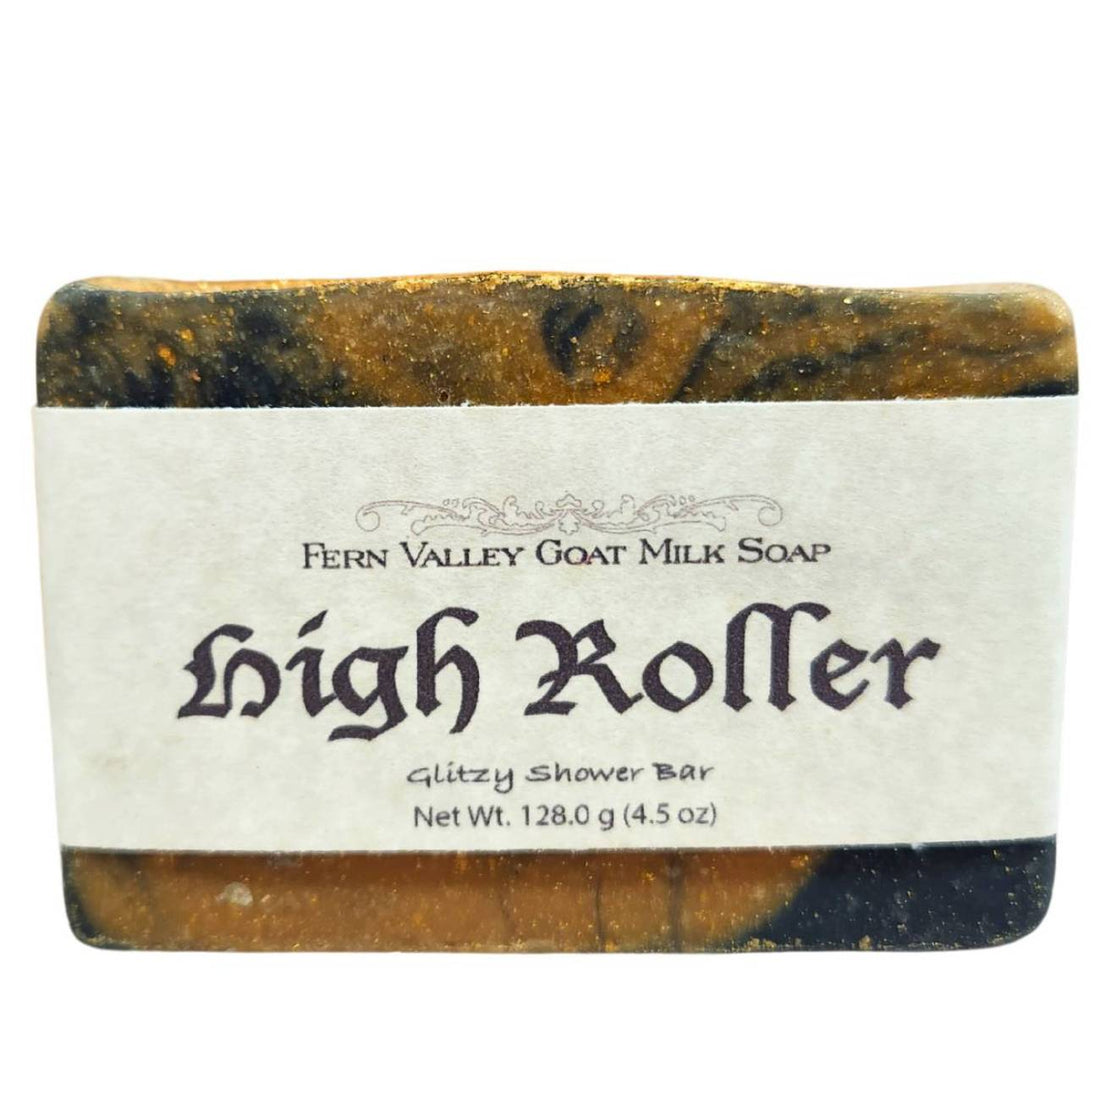 Natural Goat Milk Soap | High Roller - A Glitzy Shower Bar for Her